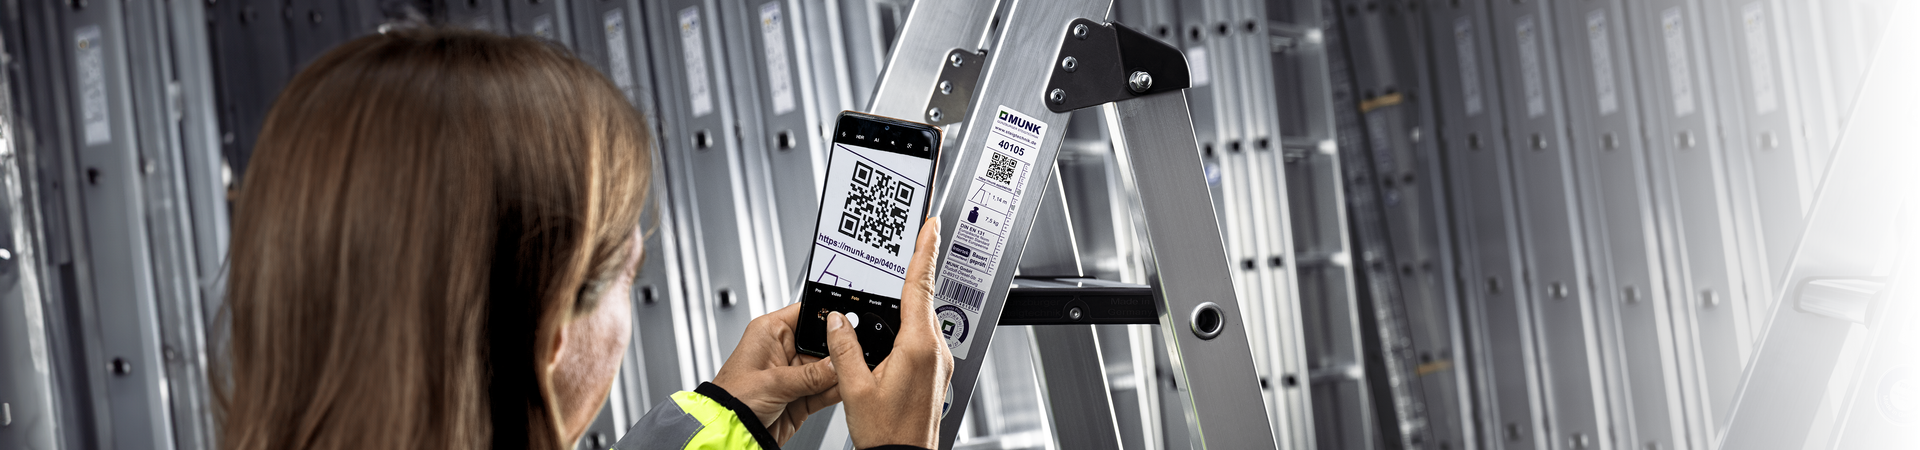 QR code on ladder is scanned | © MUNK GmbH